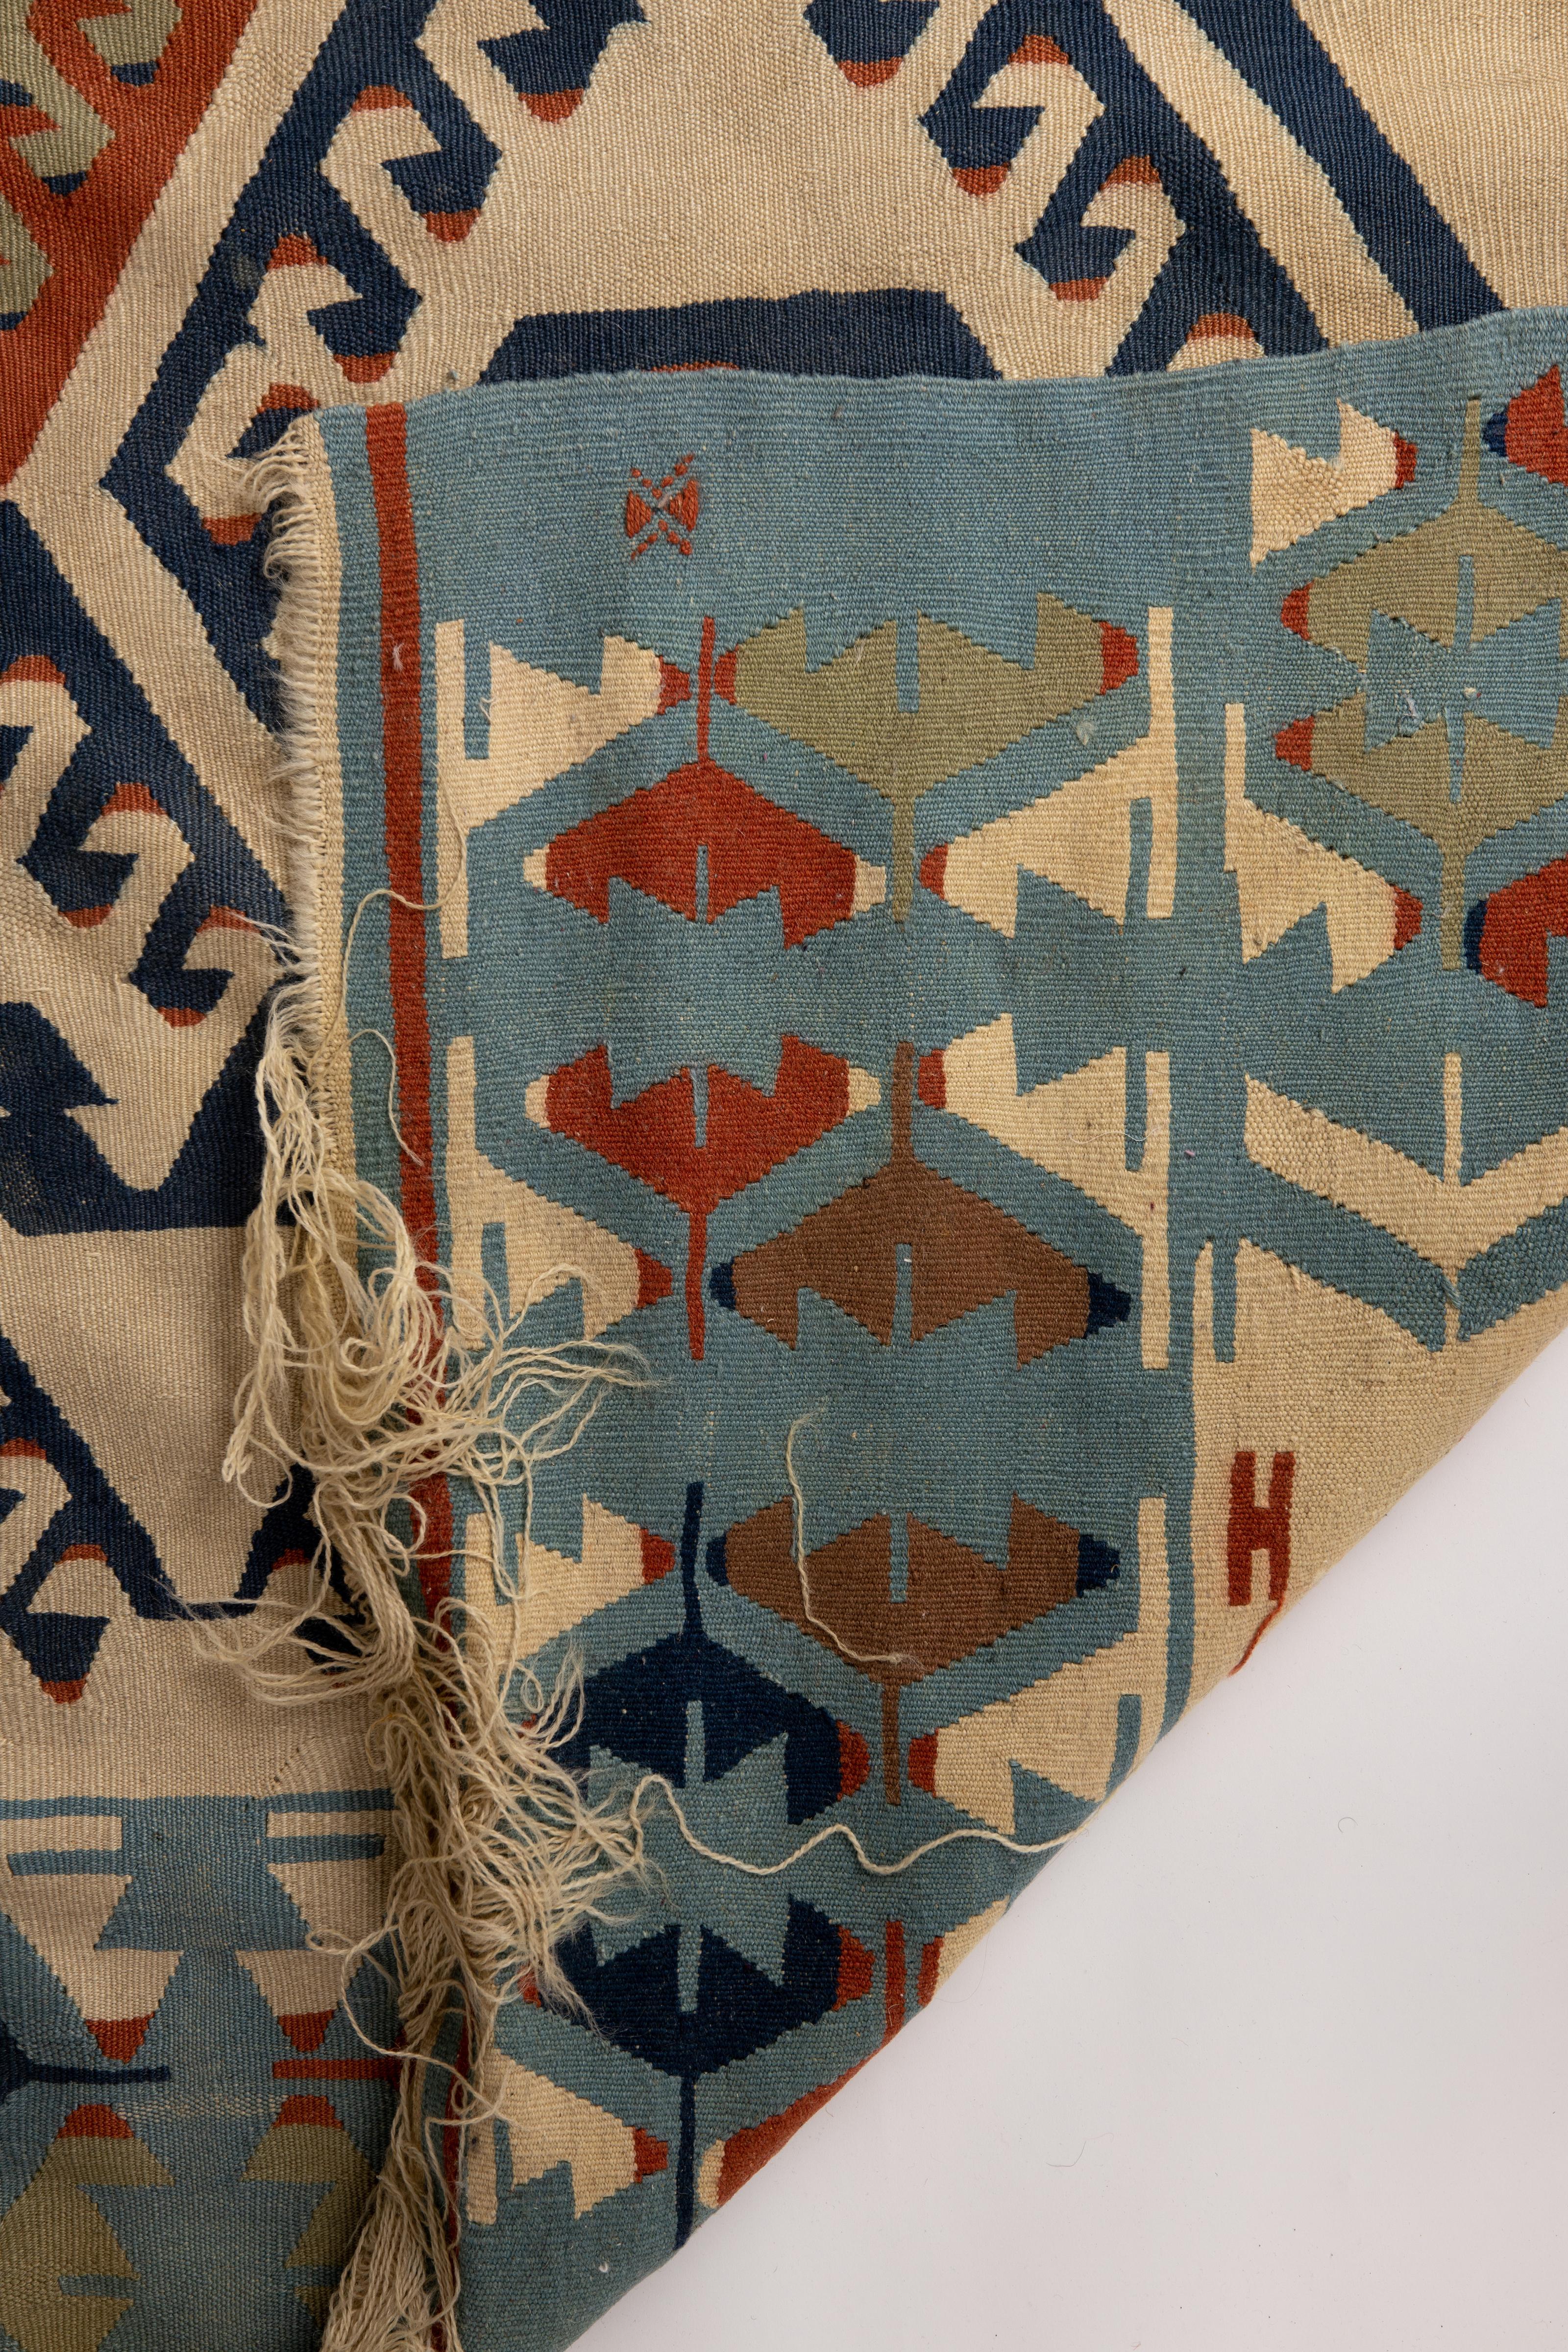 Anatolian Ornate Design Handwoven Wool Kilim Rug For Sale 6